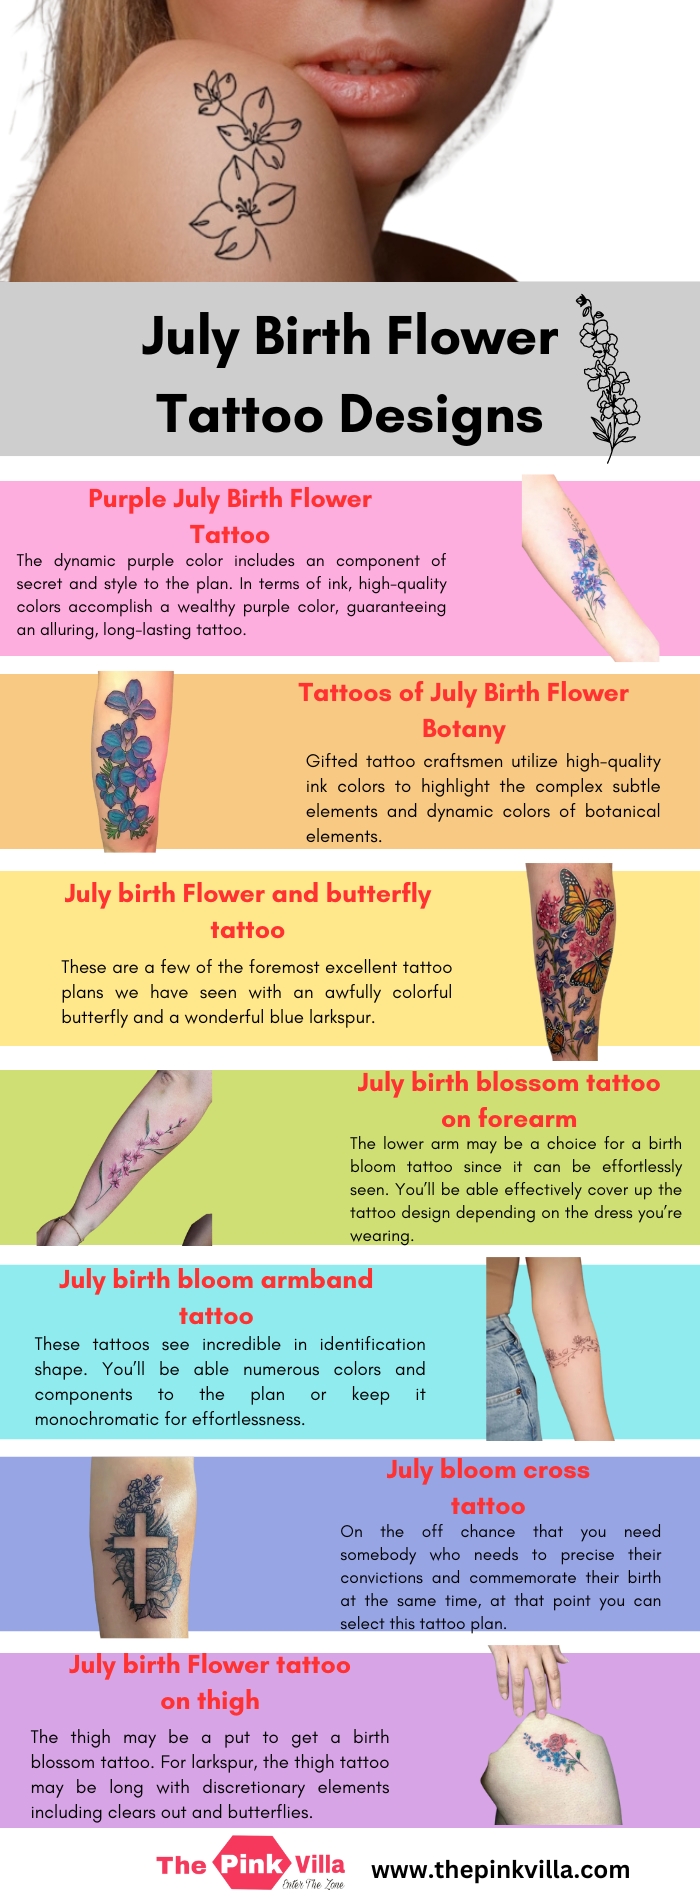 July Birth Flower Tattoo Designs